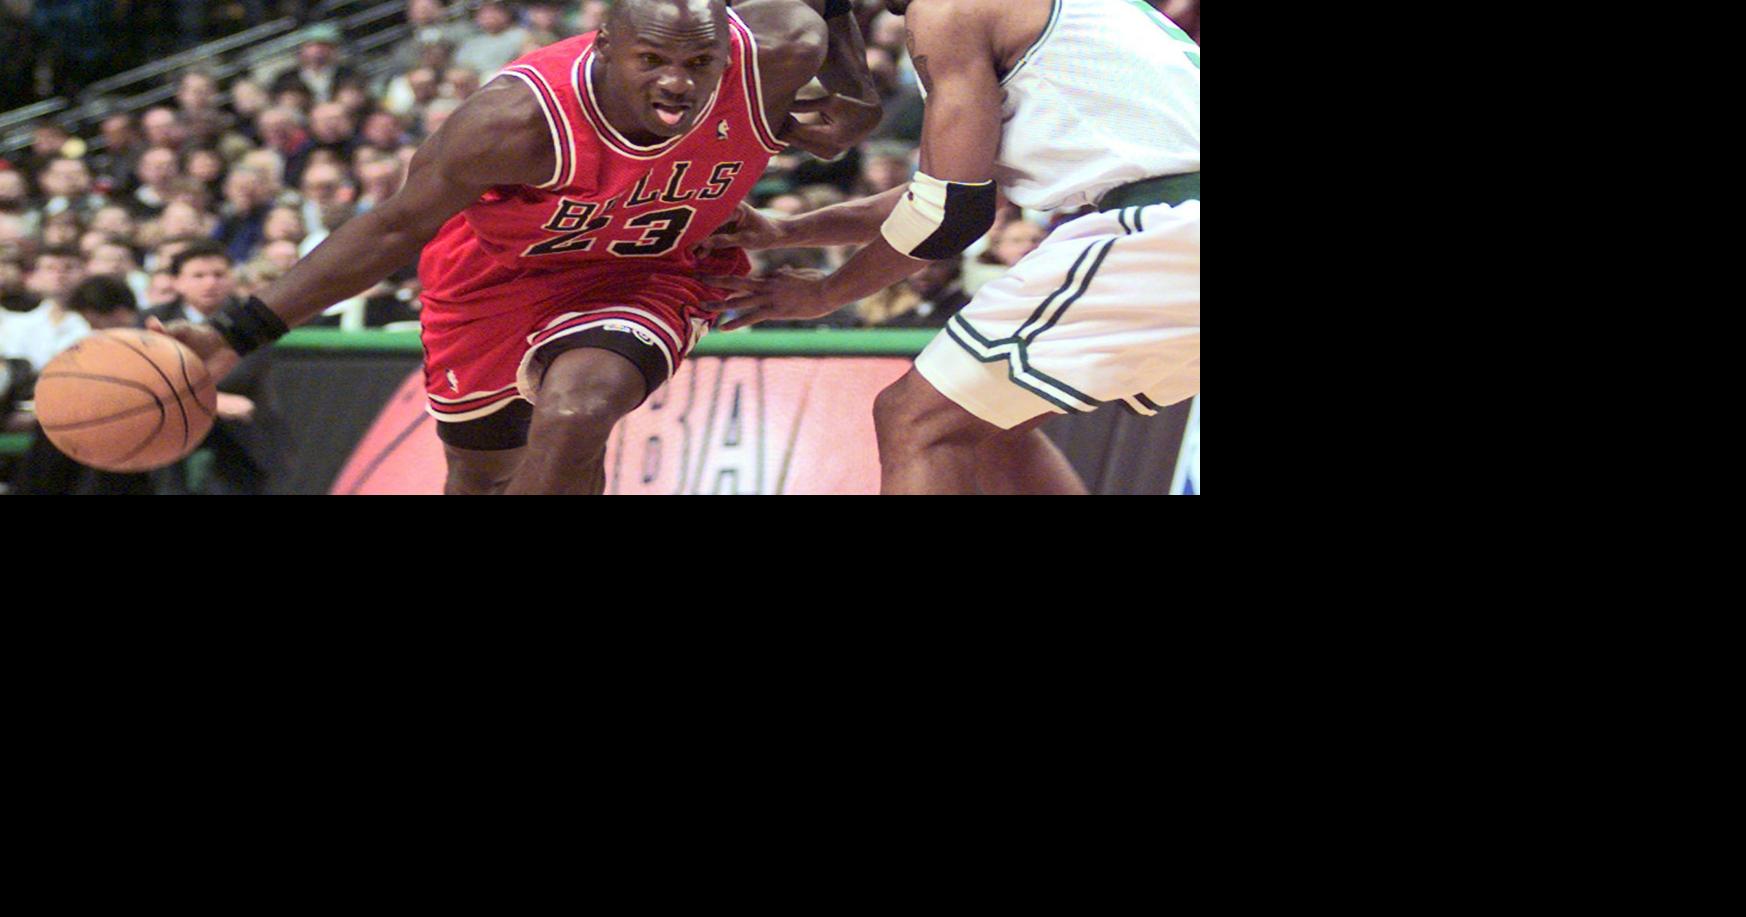 Jud Buechler and Michael Jordan of the Chicago Bulls high five